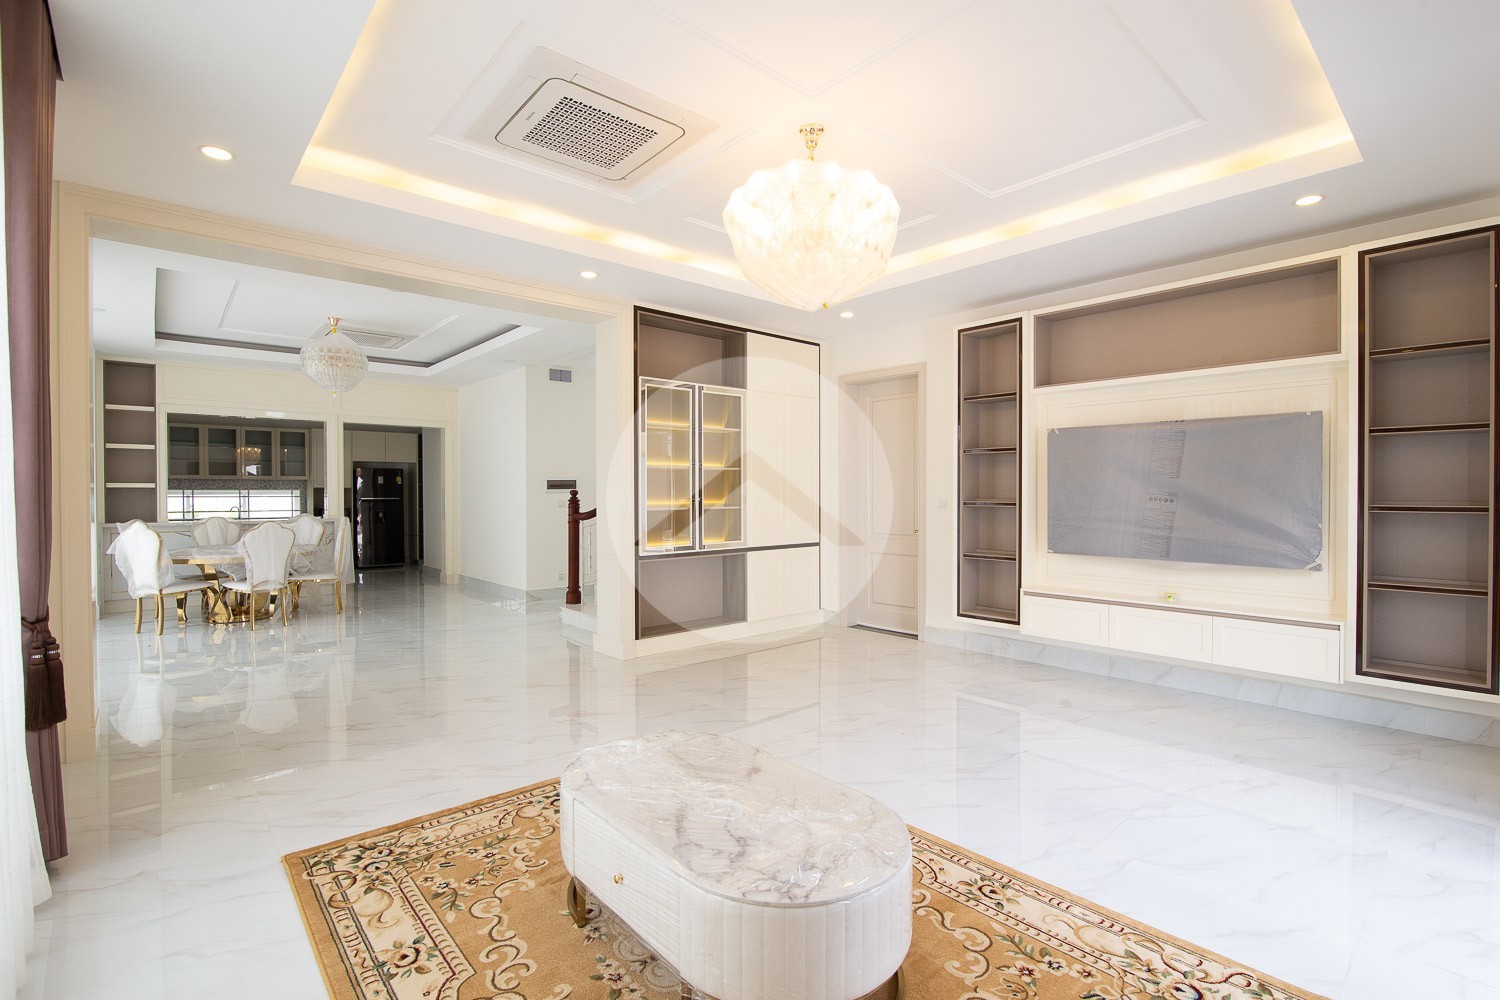 4 Bedroom Prince Villa For Rent - Borey Peng Huot, Chbar Ampov, Phnom Penh   thumbnail